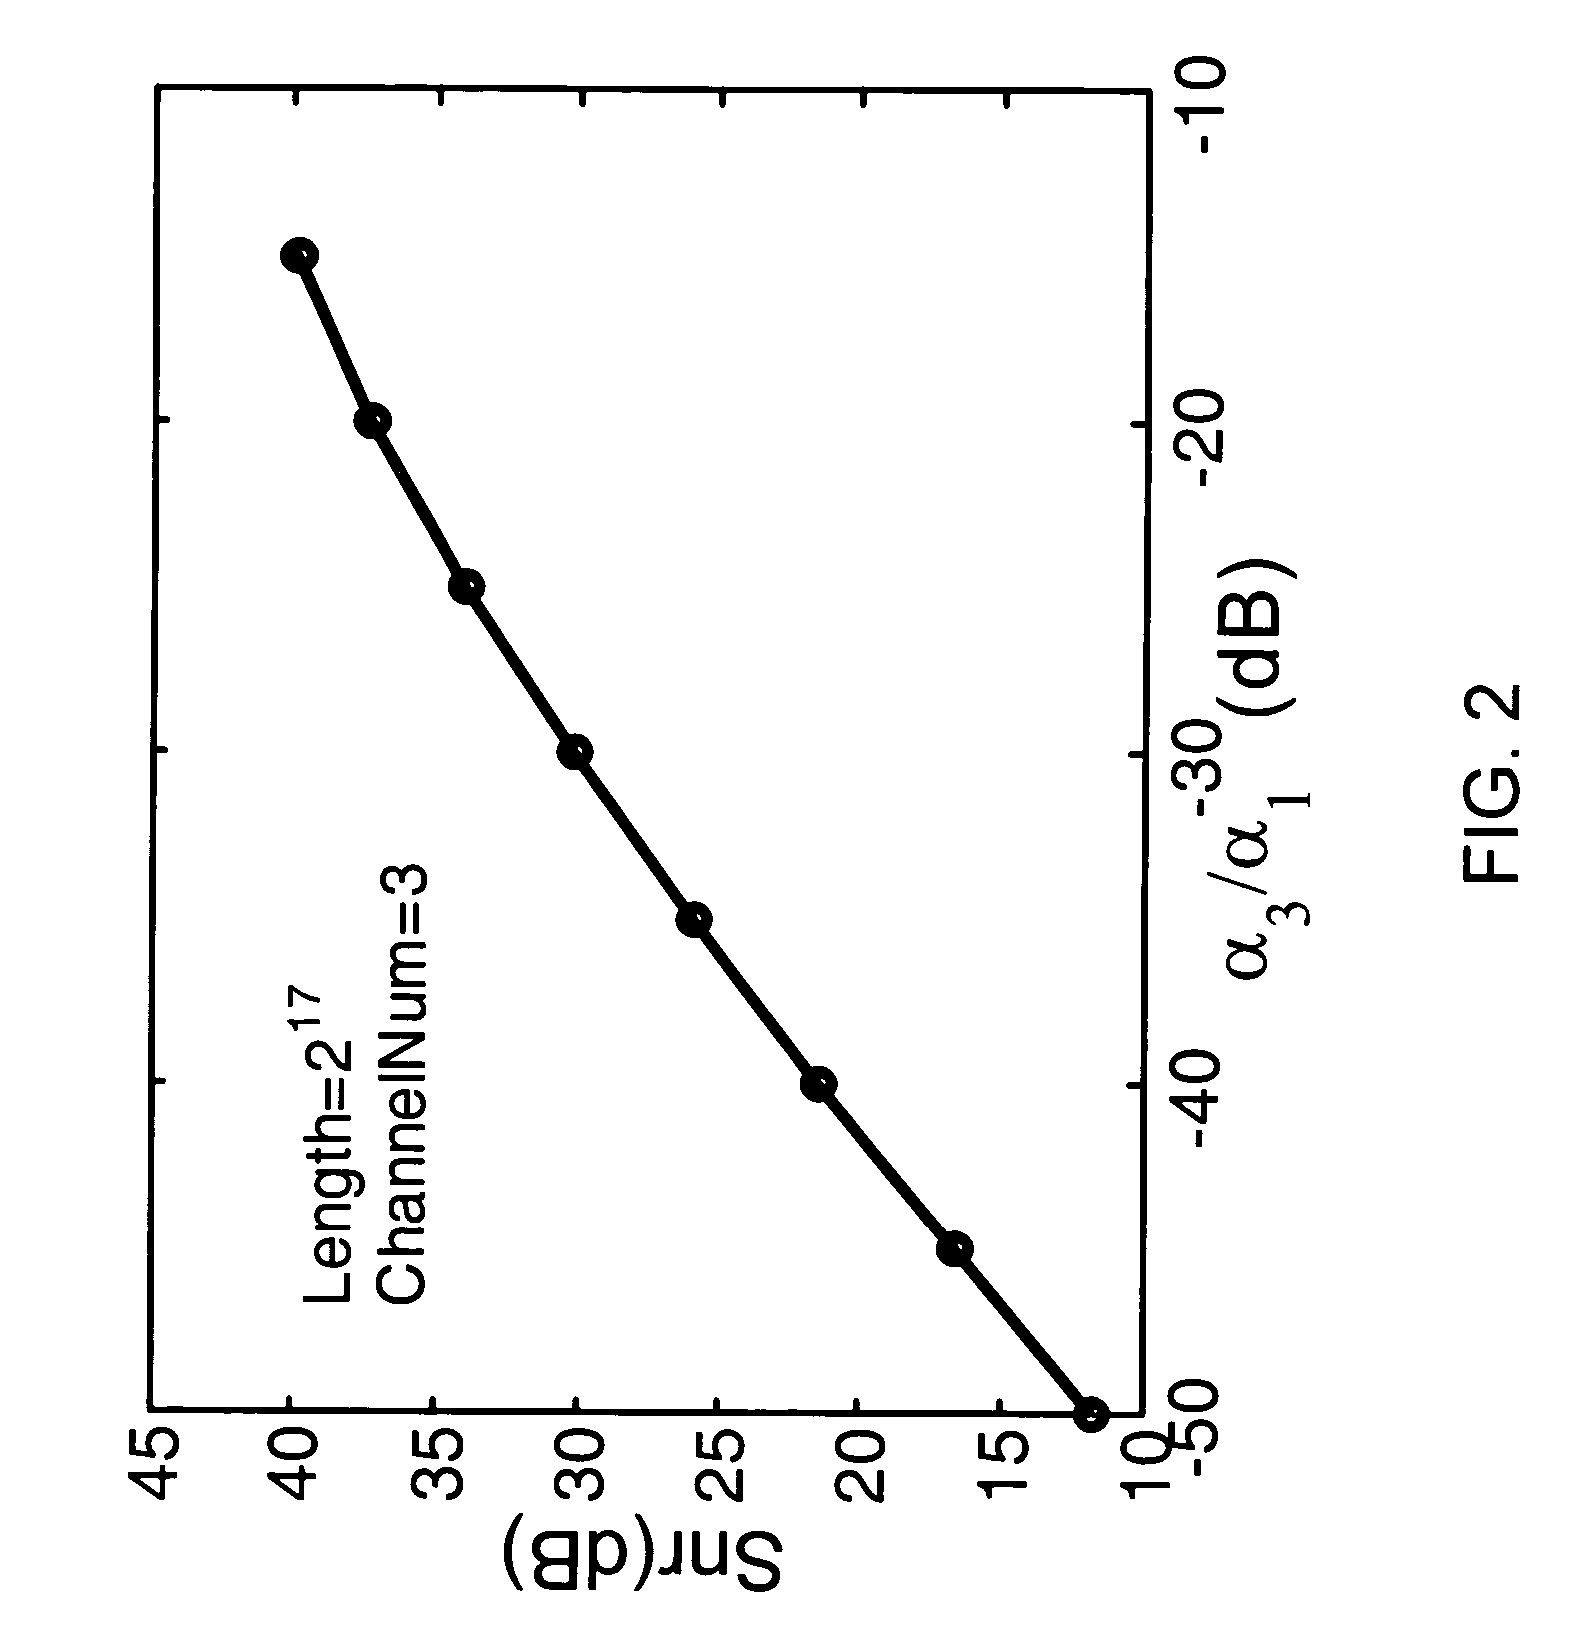 Correlation method for monitoring power amplifier